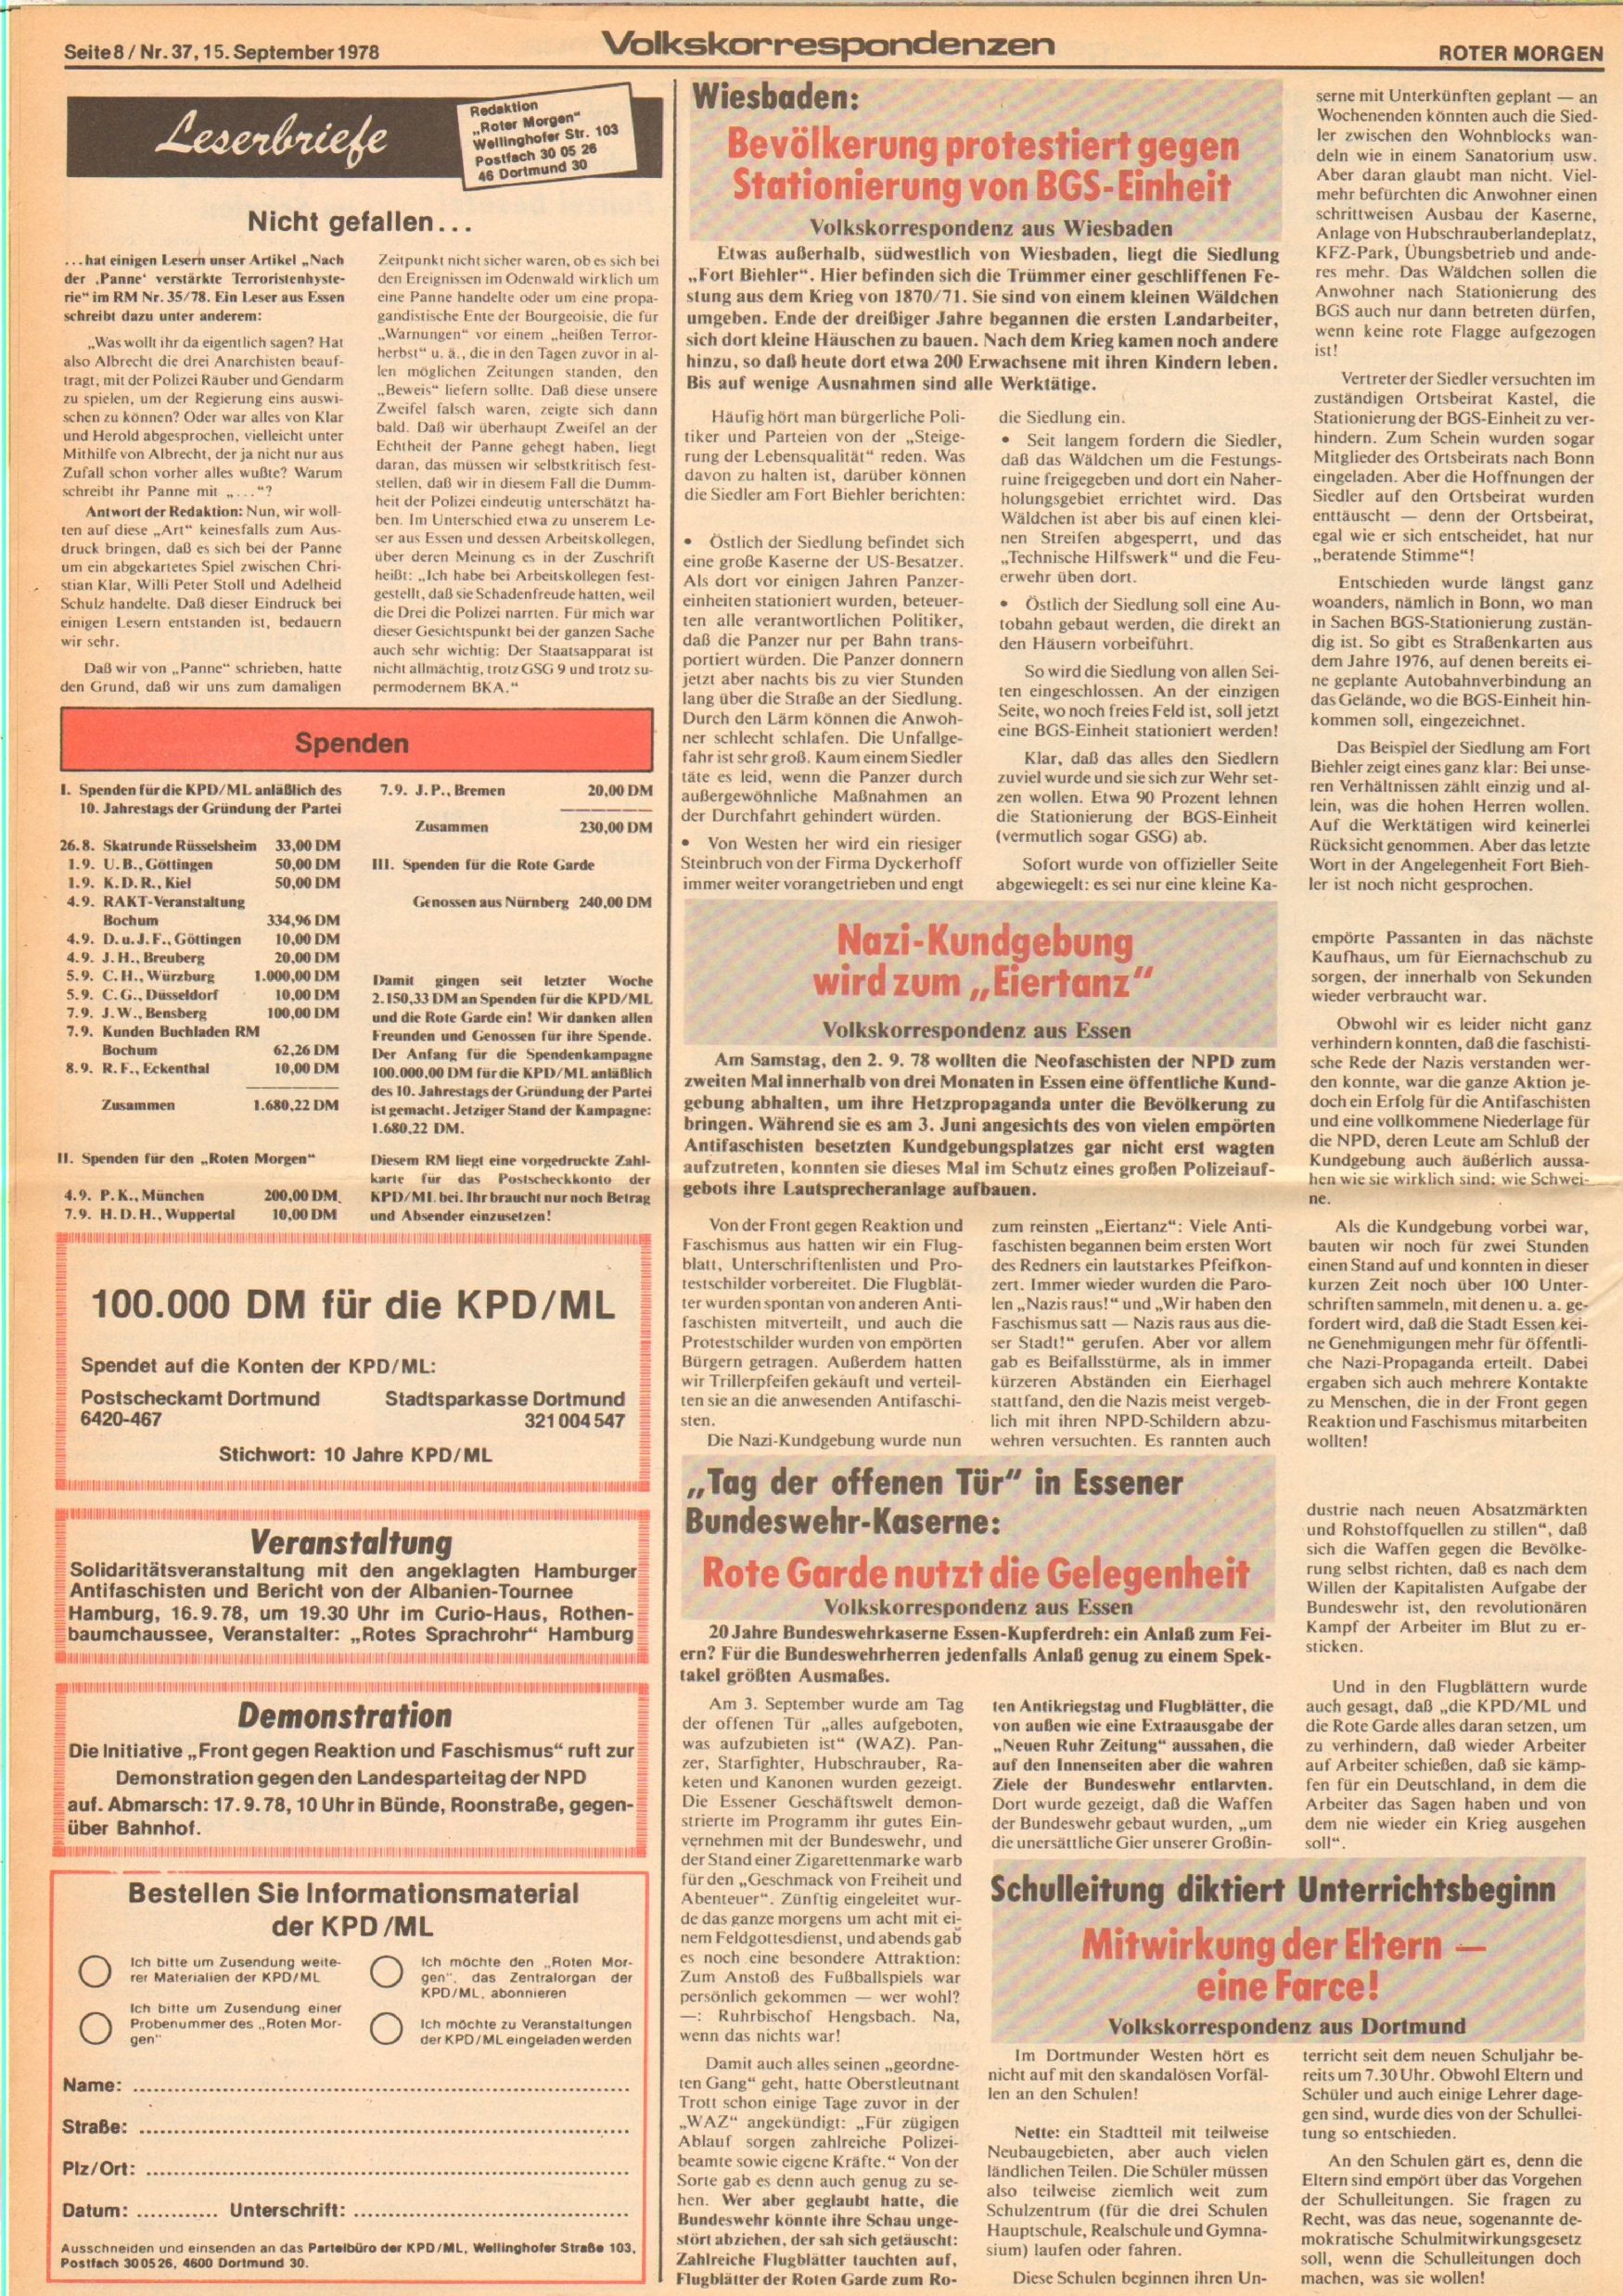 Roter Morgen, 12. Jg., 15. September 1978, Nr. 37, Seite 8